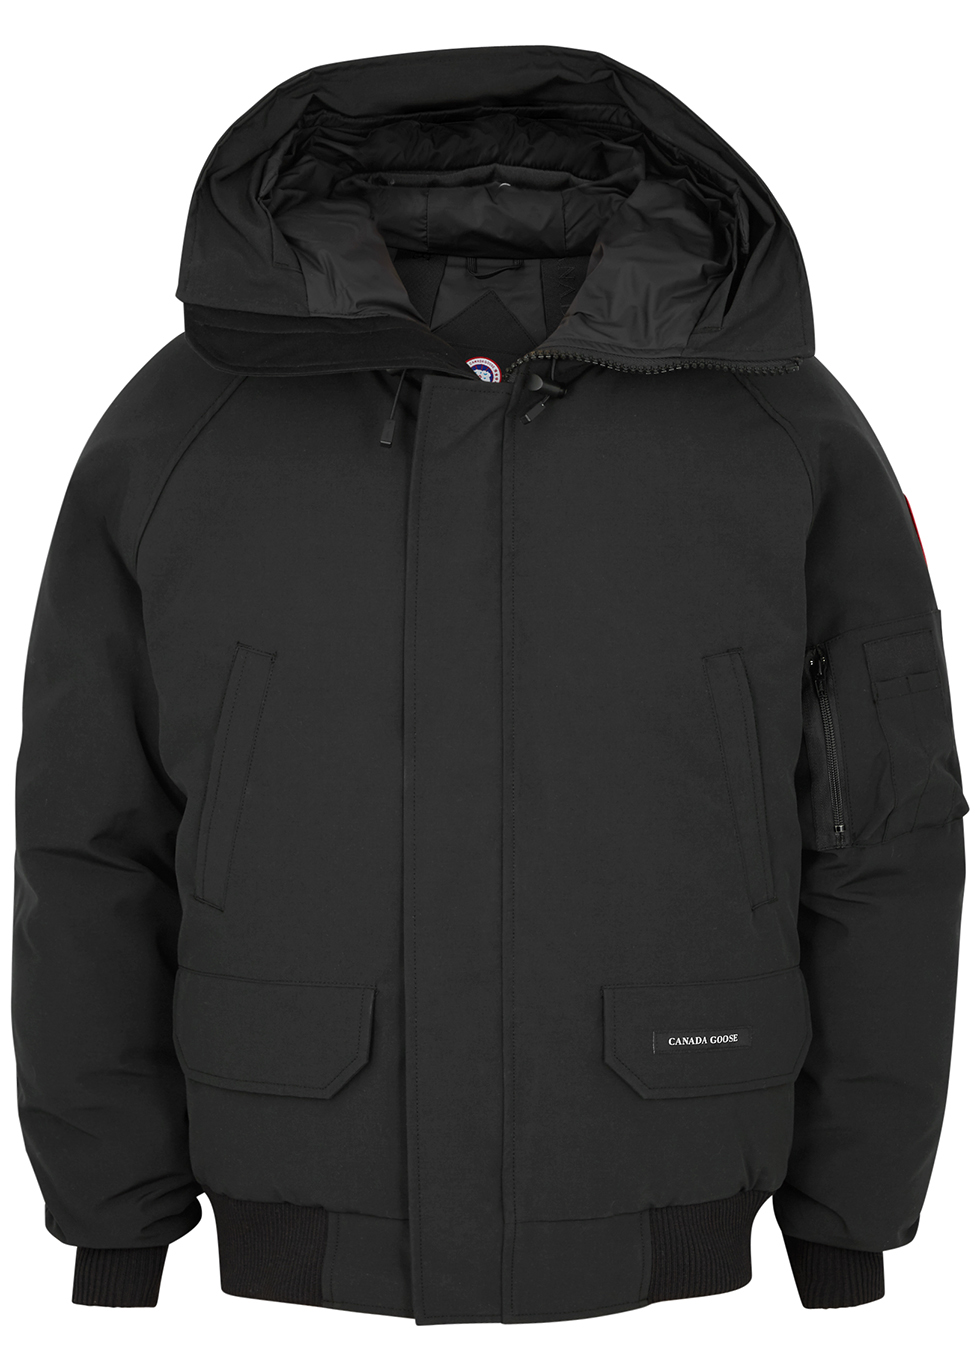 Chilliwack black Arctic-Tech bomber jacket